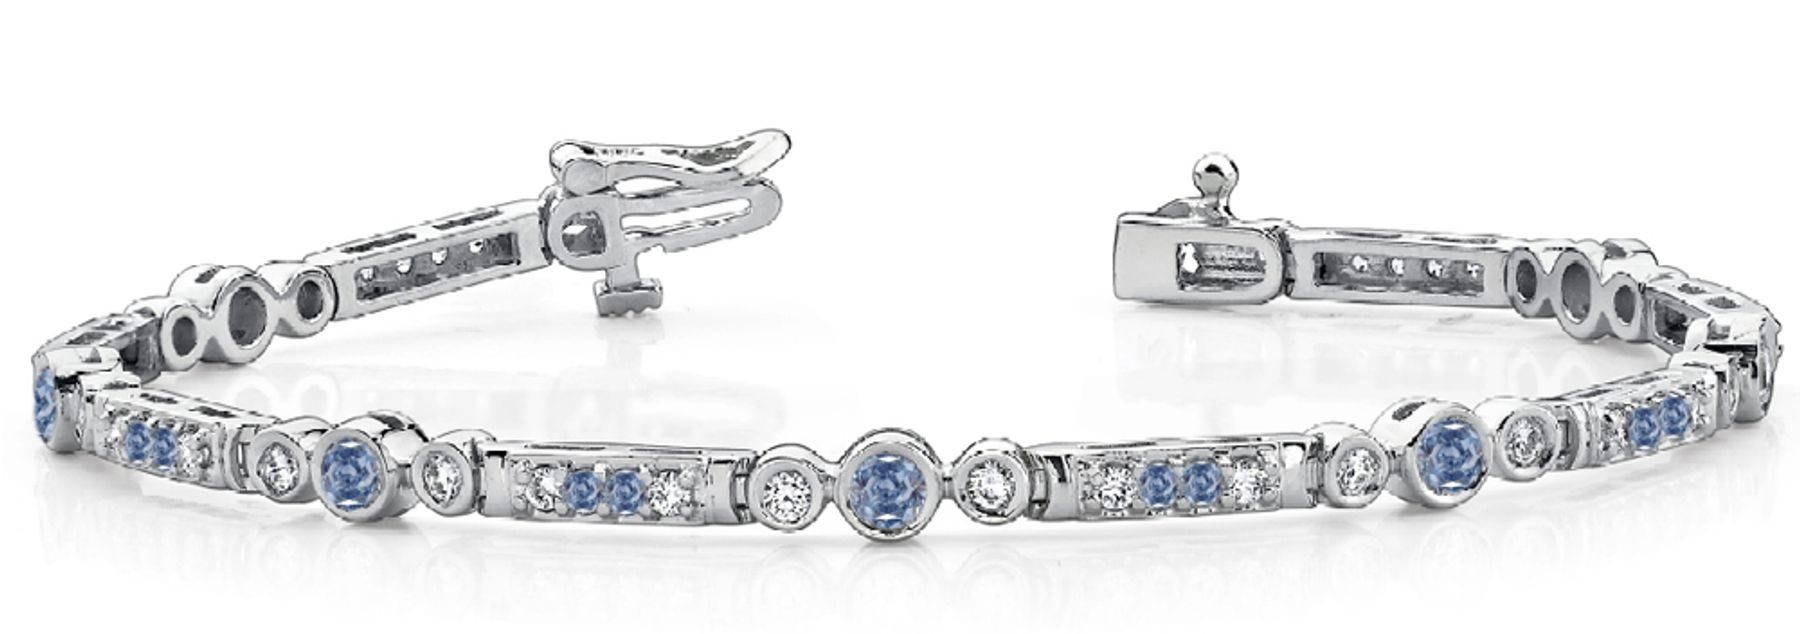 Colored Diamond Bracelets: Blue Diamonds - Blue Colored Diamond Bracelets